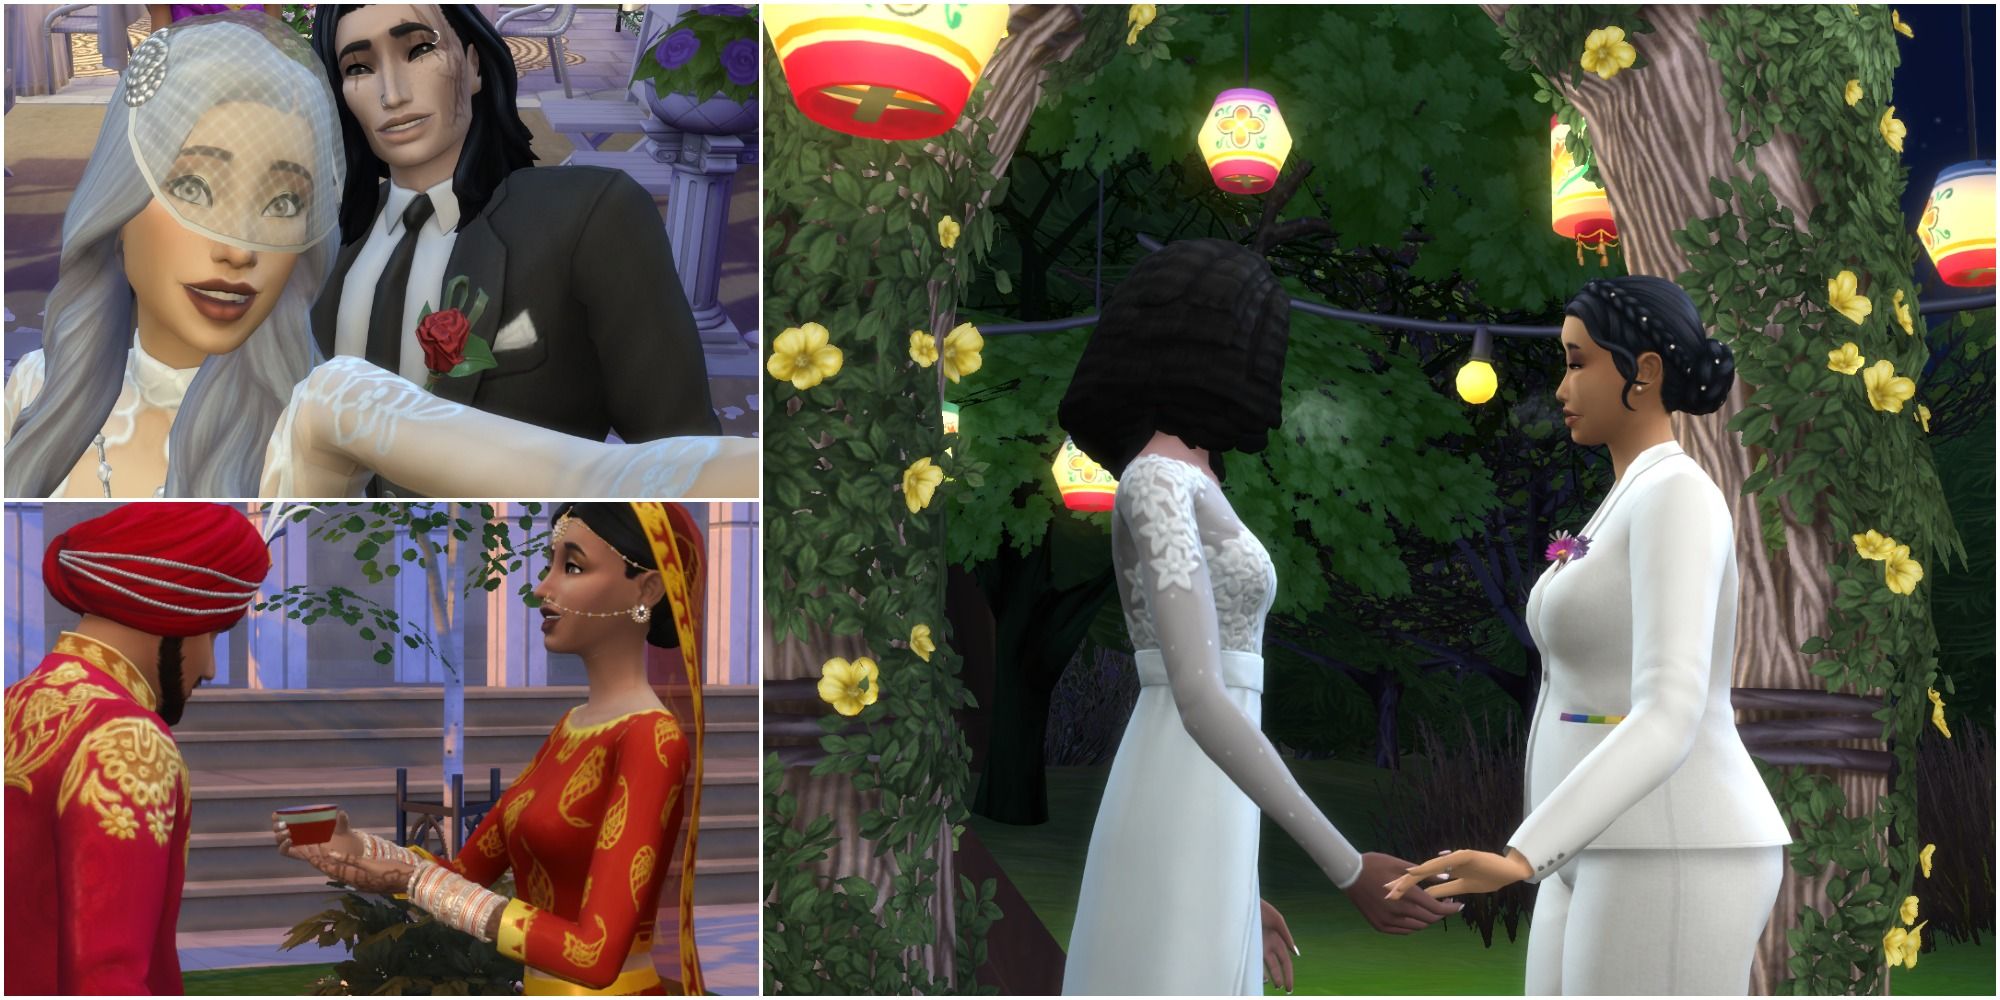 sims 4 wedding stories, selfie, tea ceremony, marriage vows